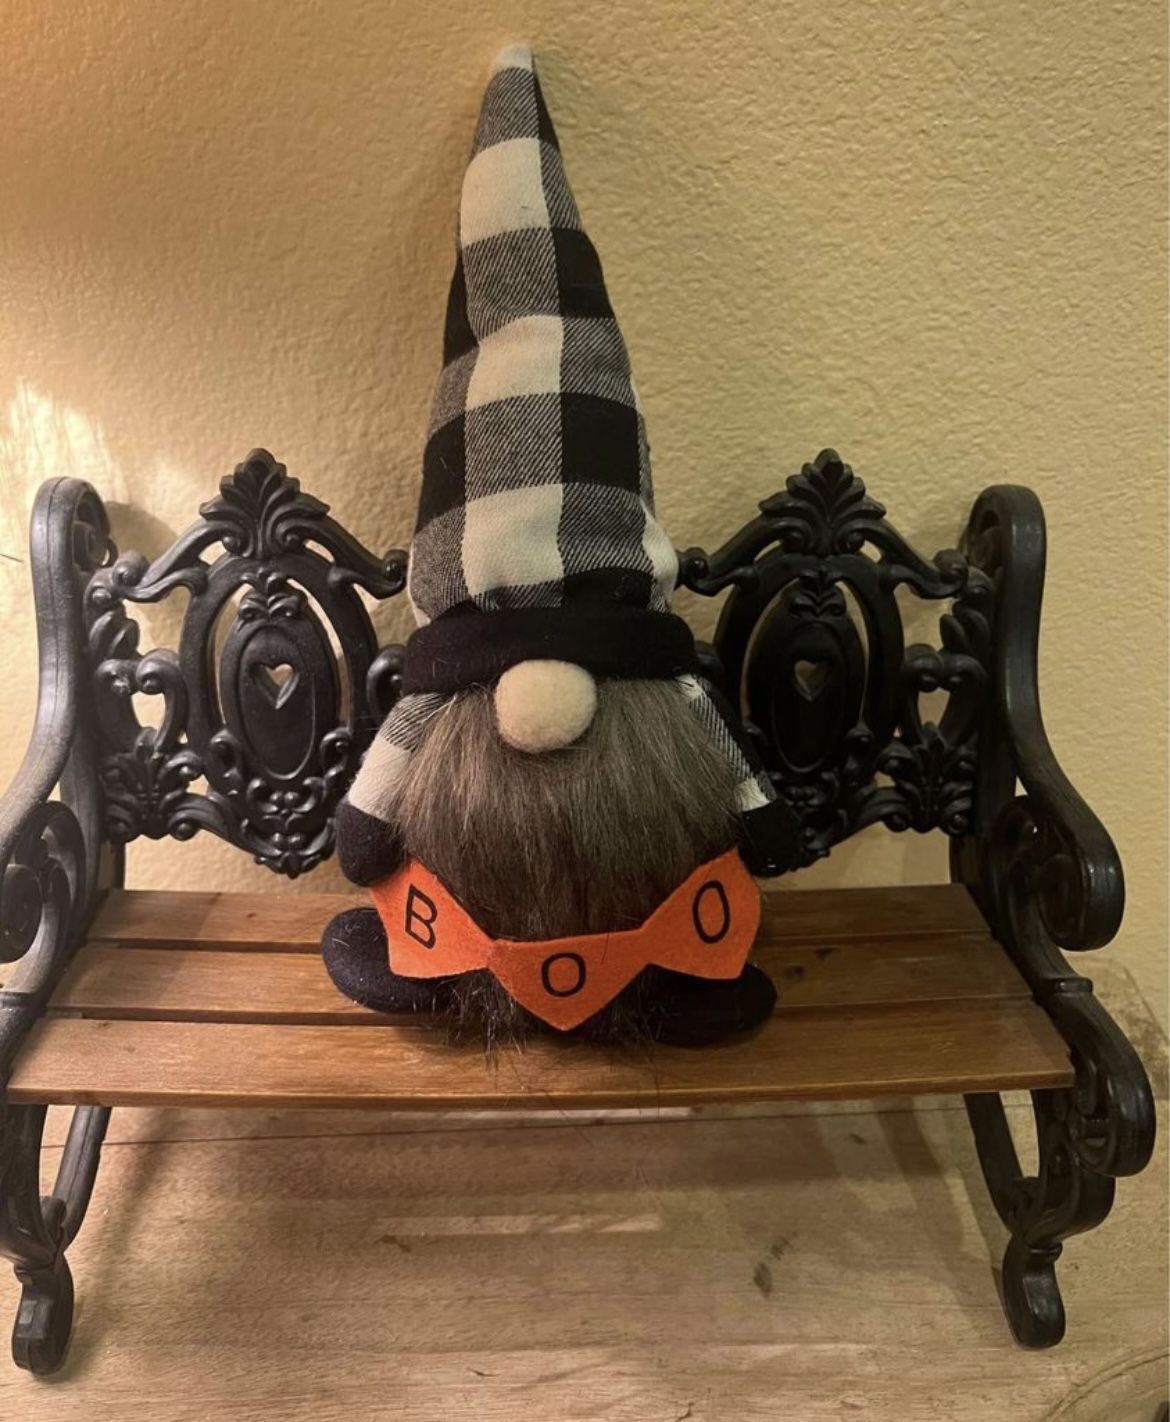 Halloween Gnome Decoration 11” Tall 